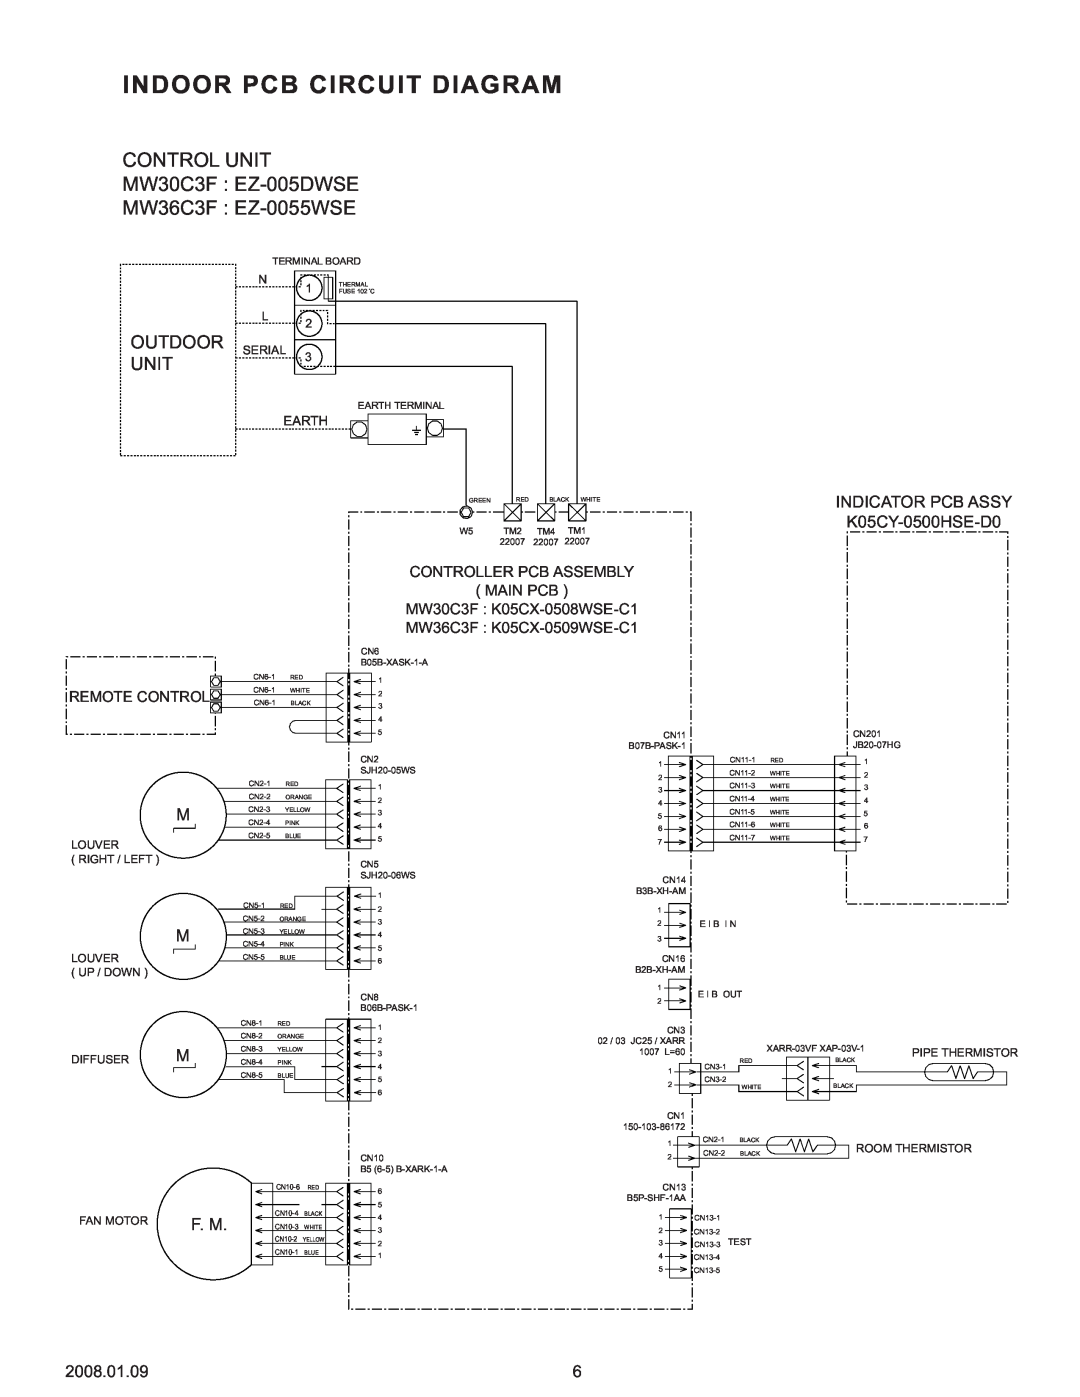 Friedrich MR36C3F Indoor Pcb Circuit Diagram, CONTROL UNIT MW30C3F EZ-005DWSE, MW36C3F EZ-0055WSE, Controller Pcb Assembly 